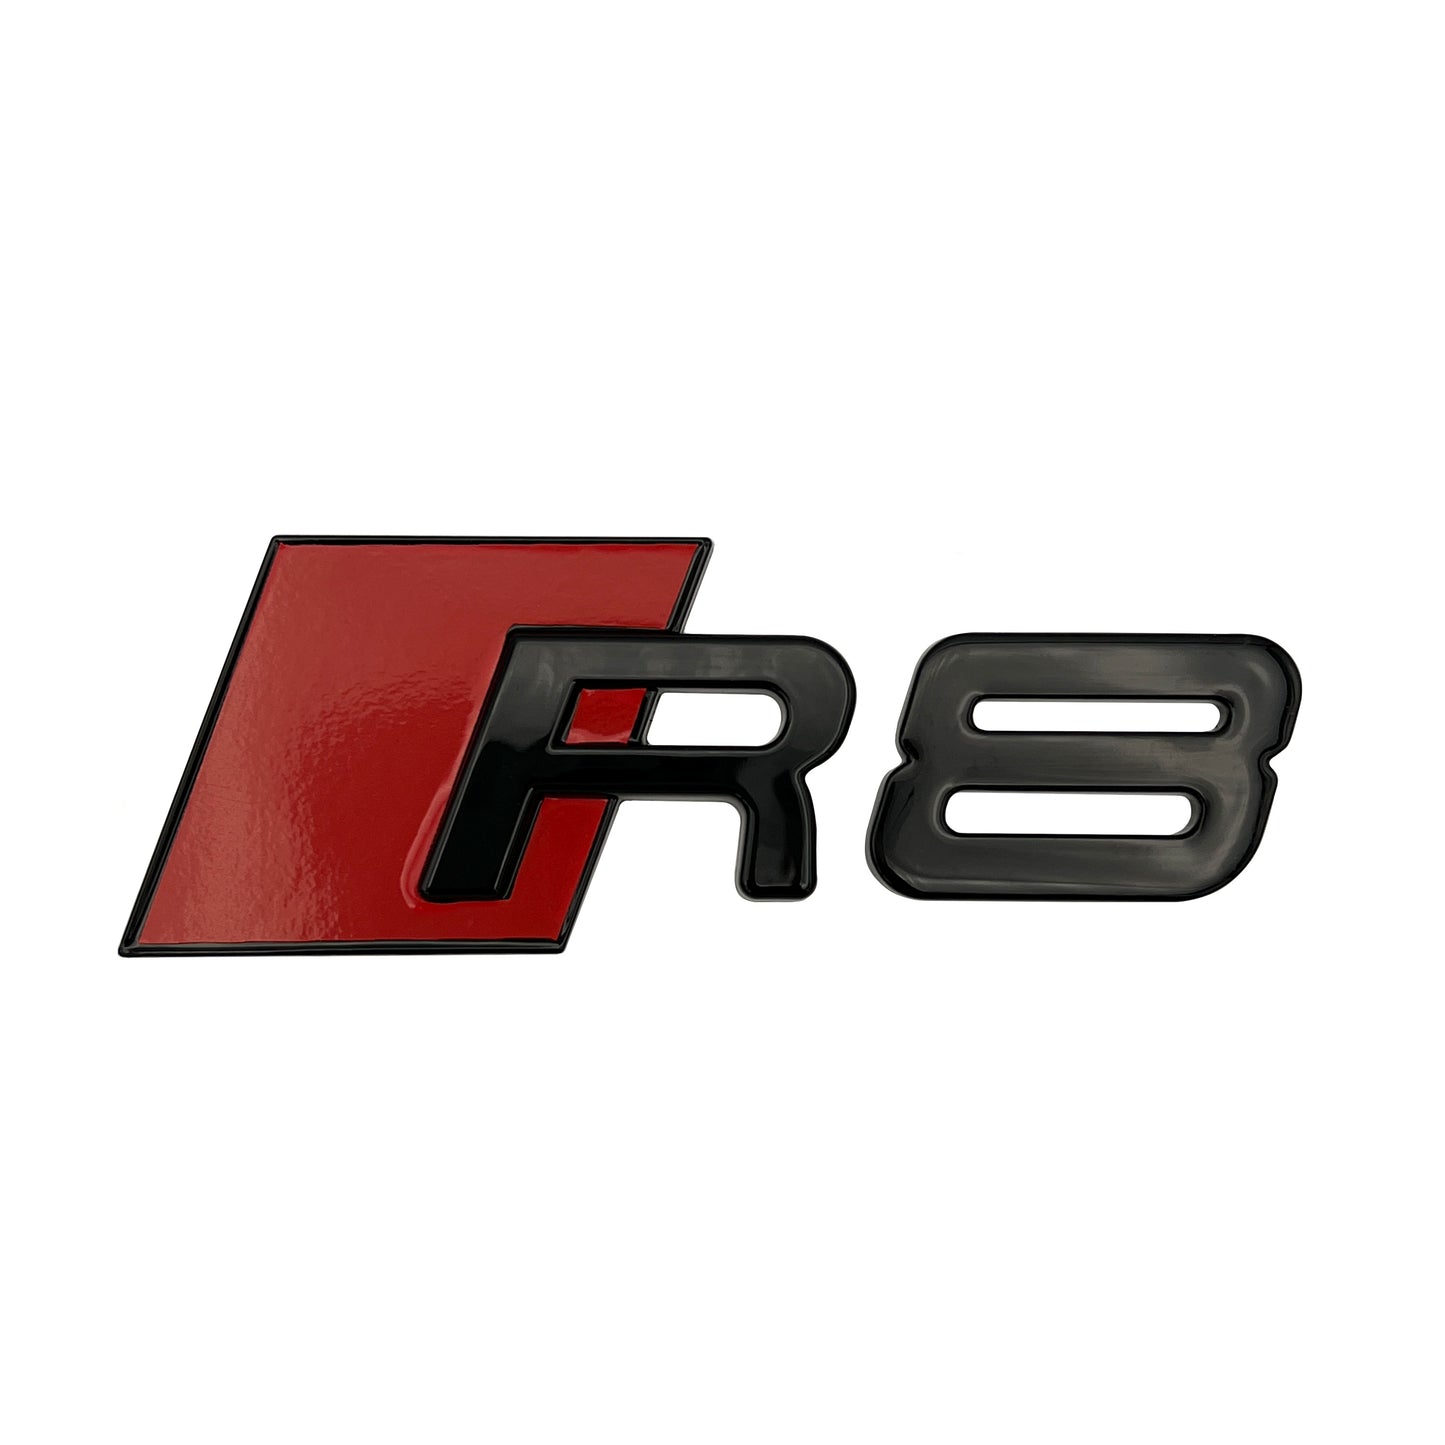 Audi R8 Gloss Black Emblem 3D Badge Rear Trunk Lid for Audi S Line Logo Modified